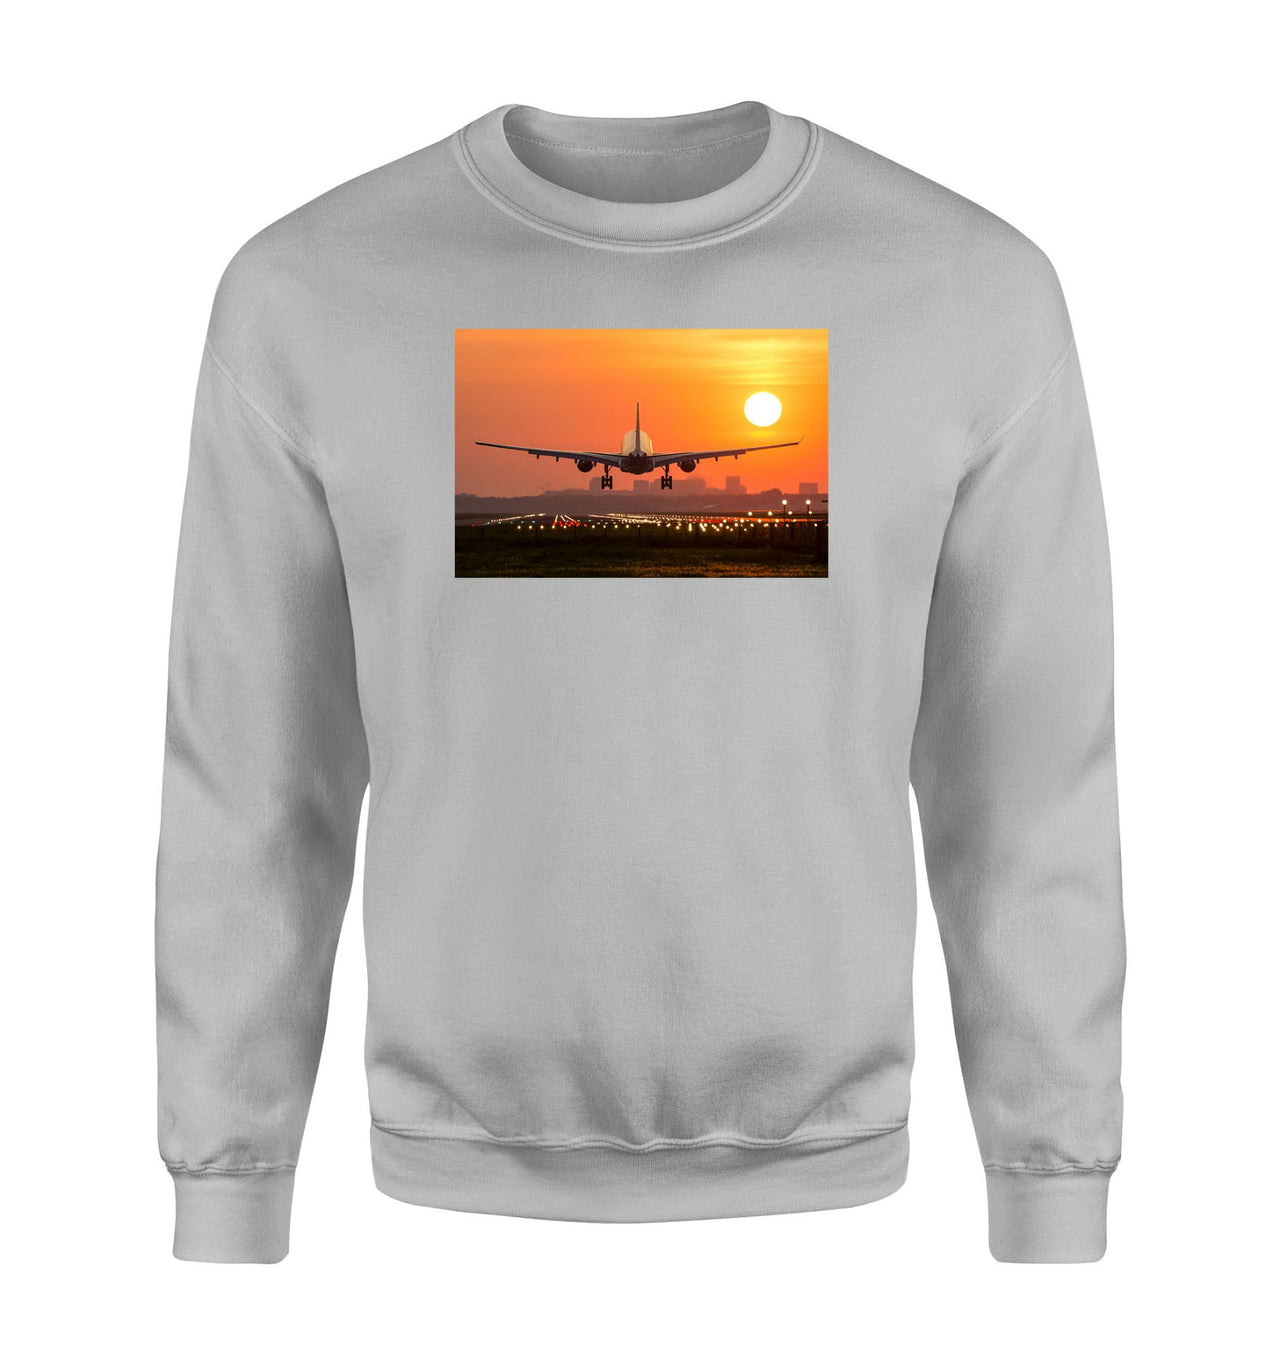 Amazing Airbus A330 Landing at Sunset Designed Sweatshirts